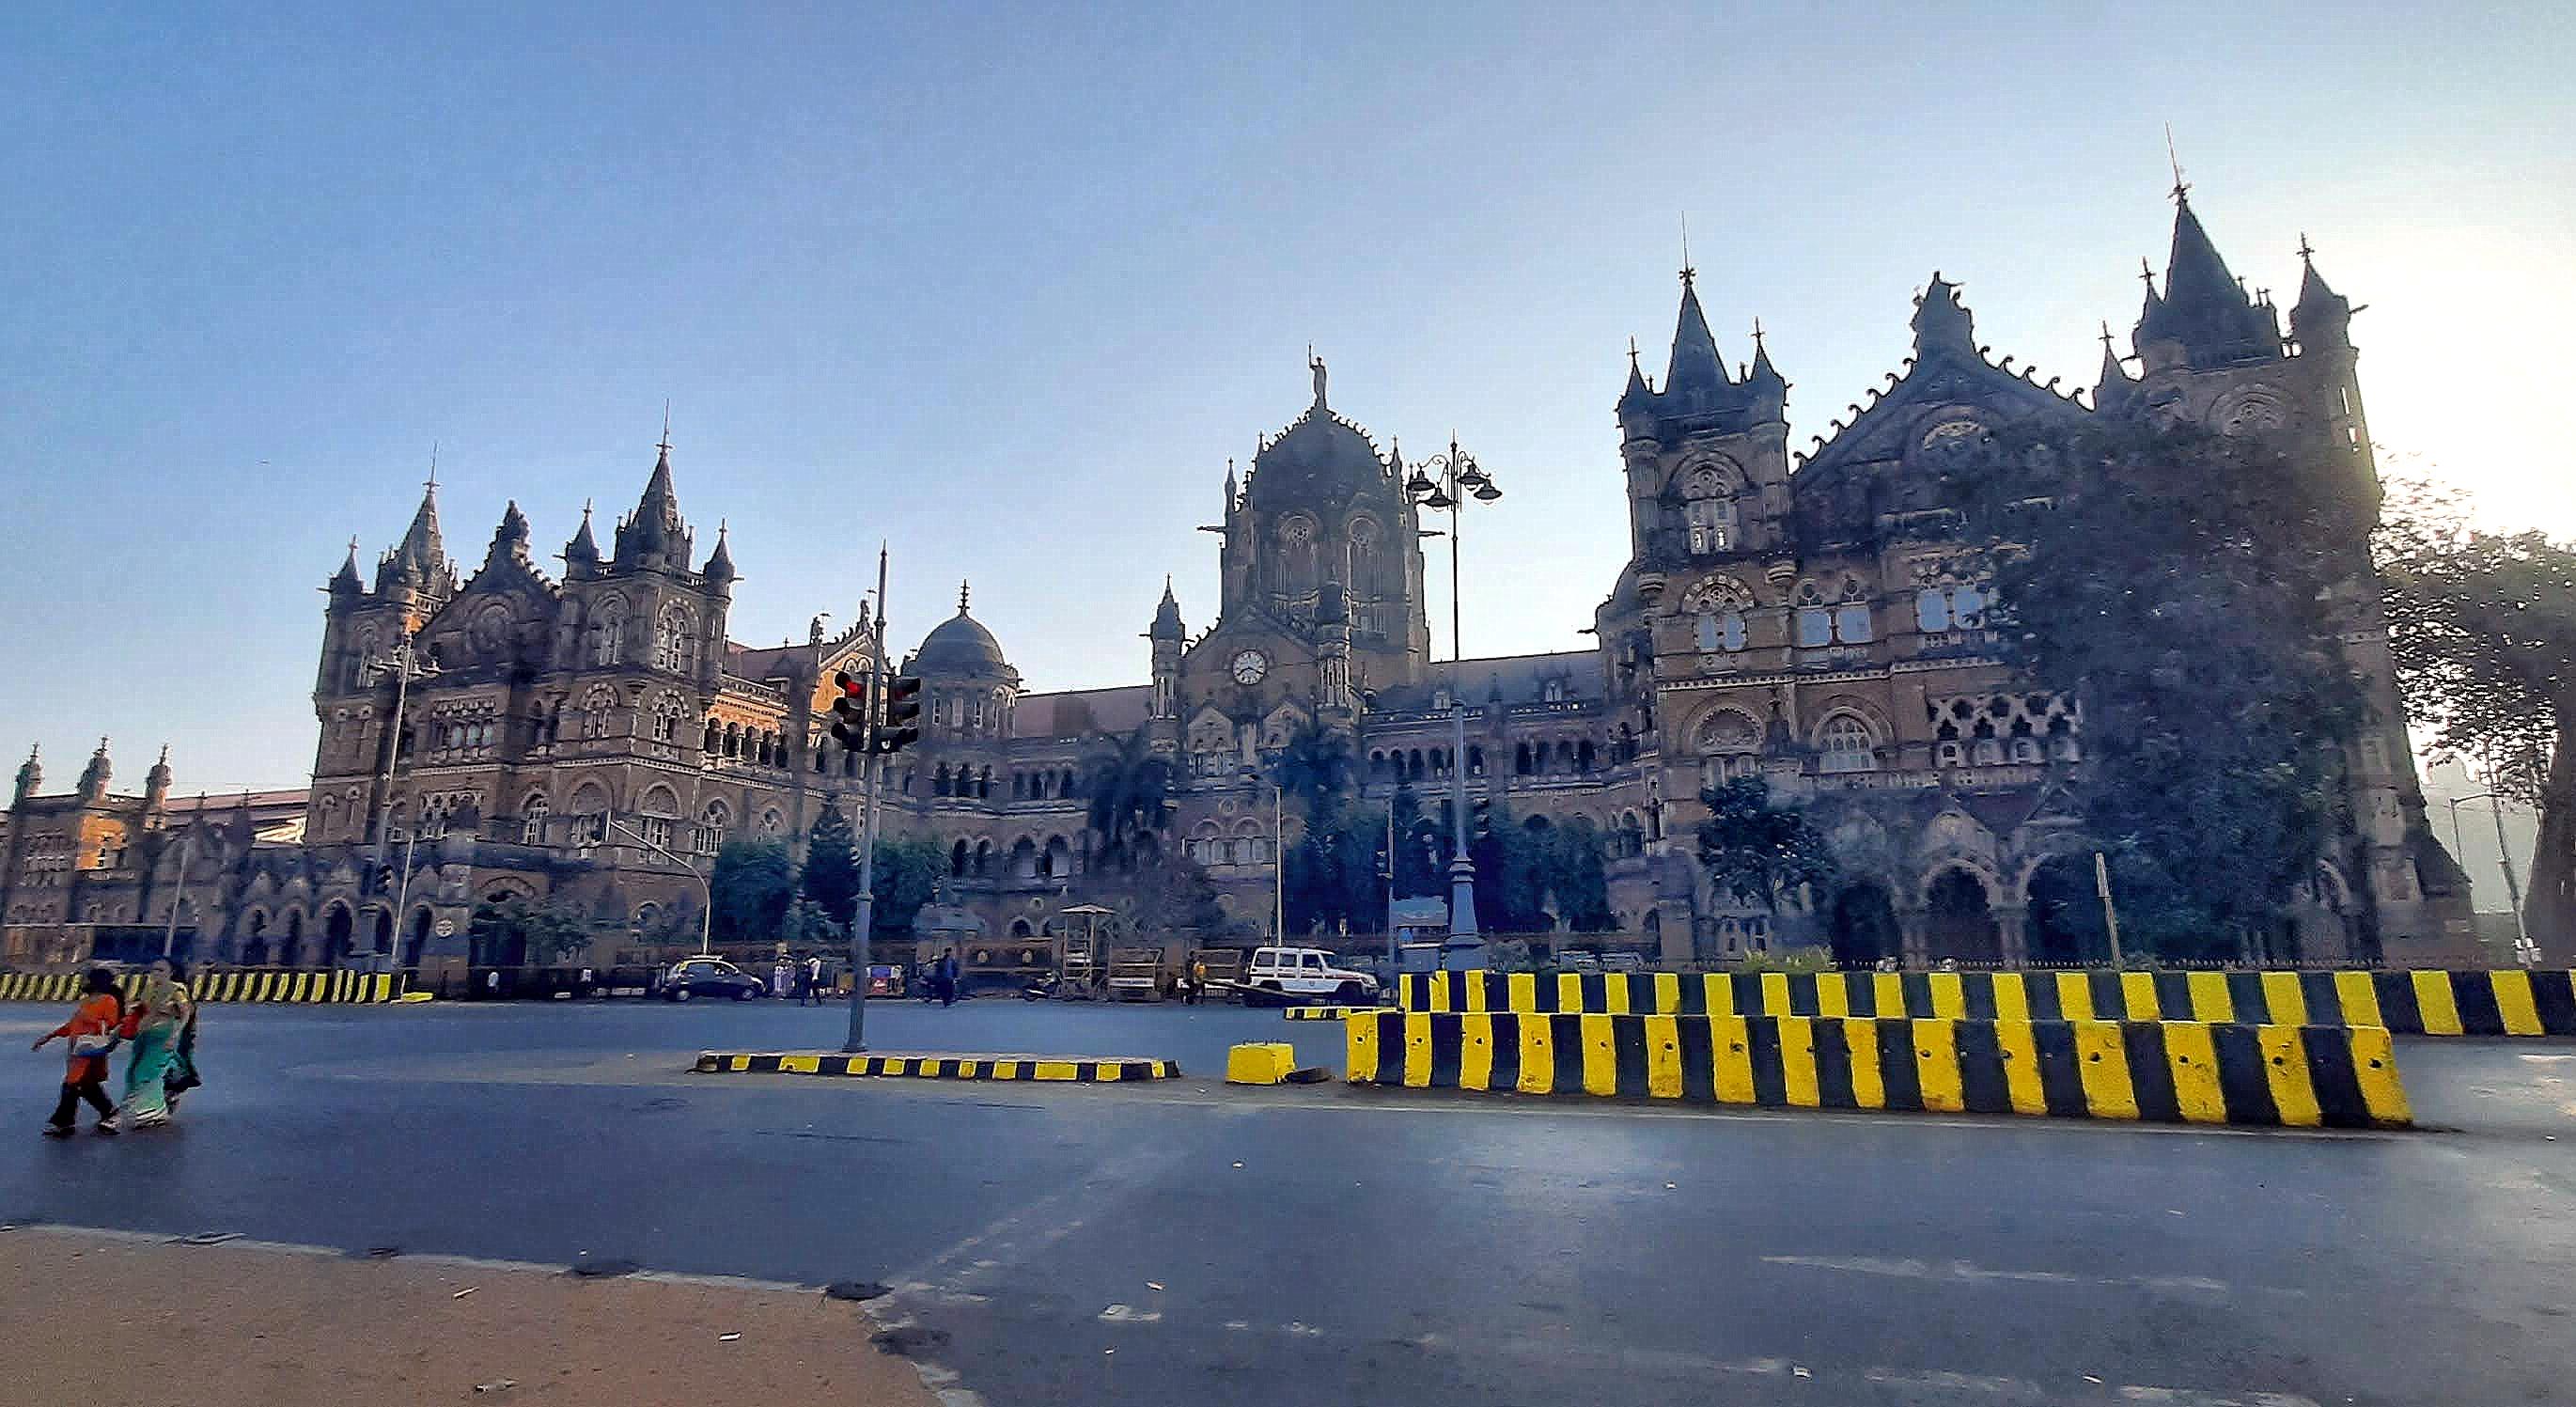 Mumbai Daily: Chhatrapati Shivaji Maharaj Terminus